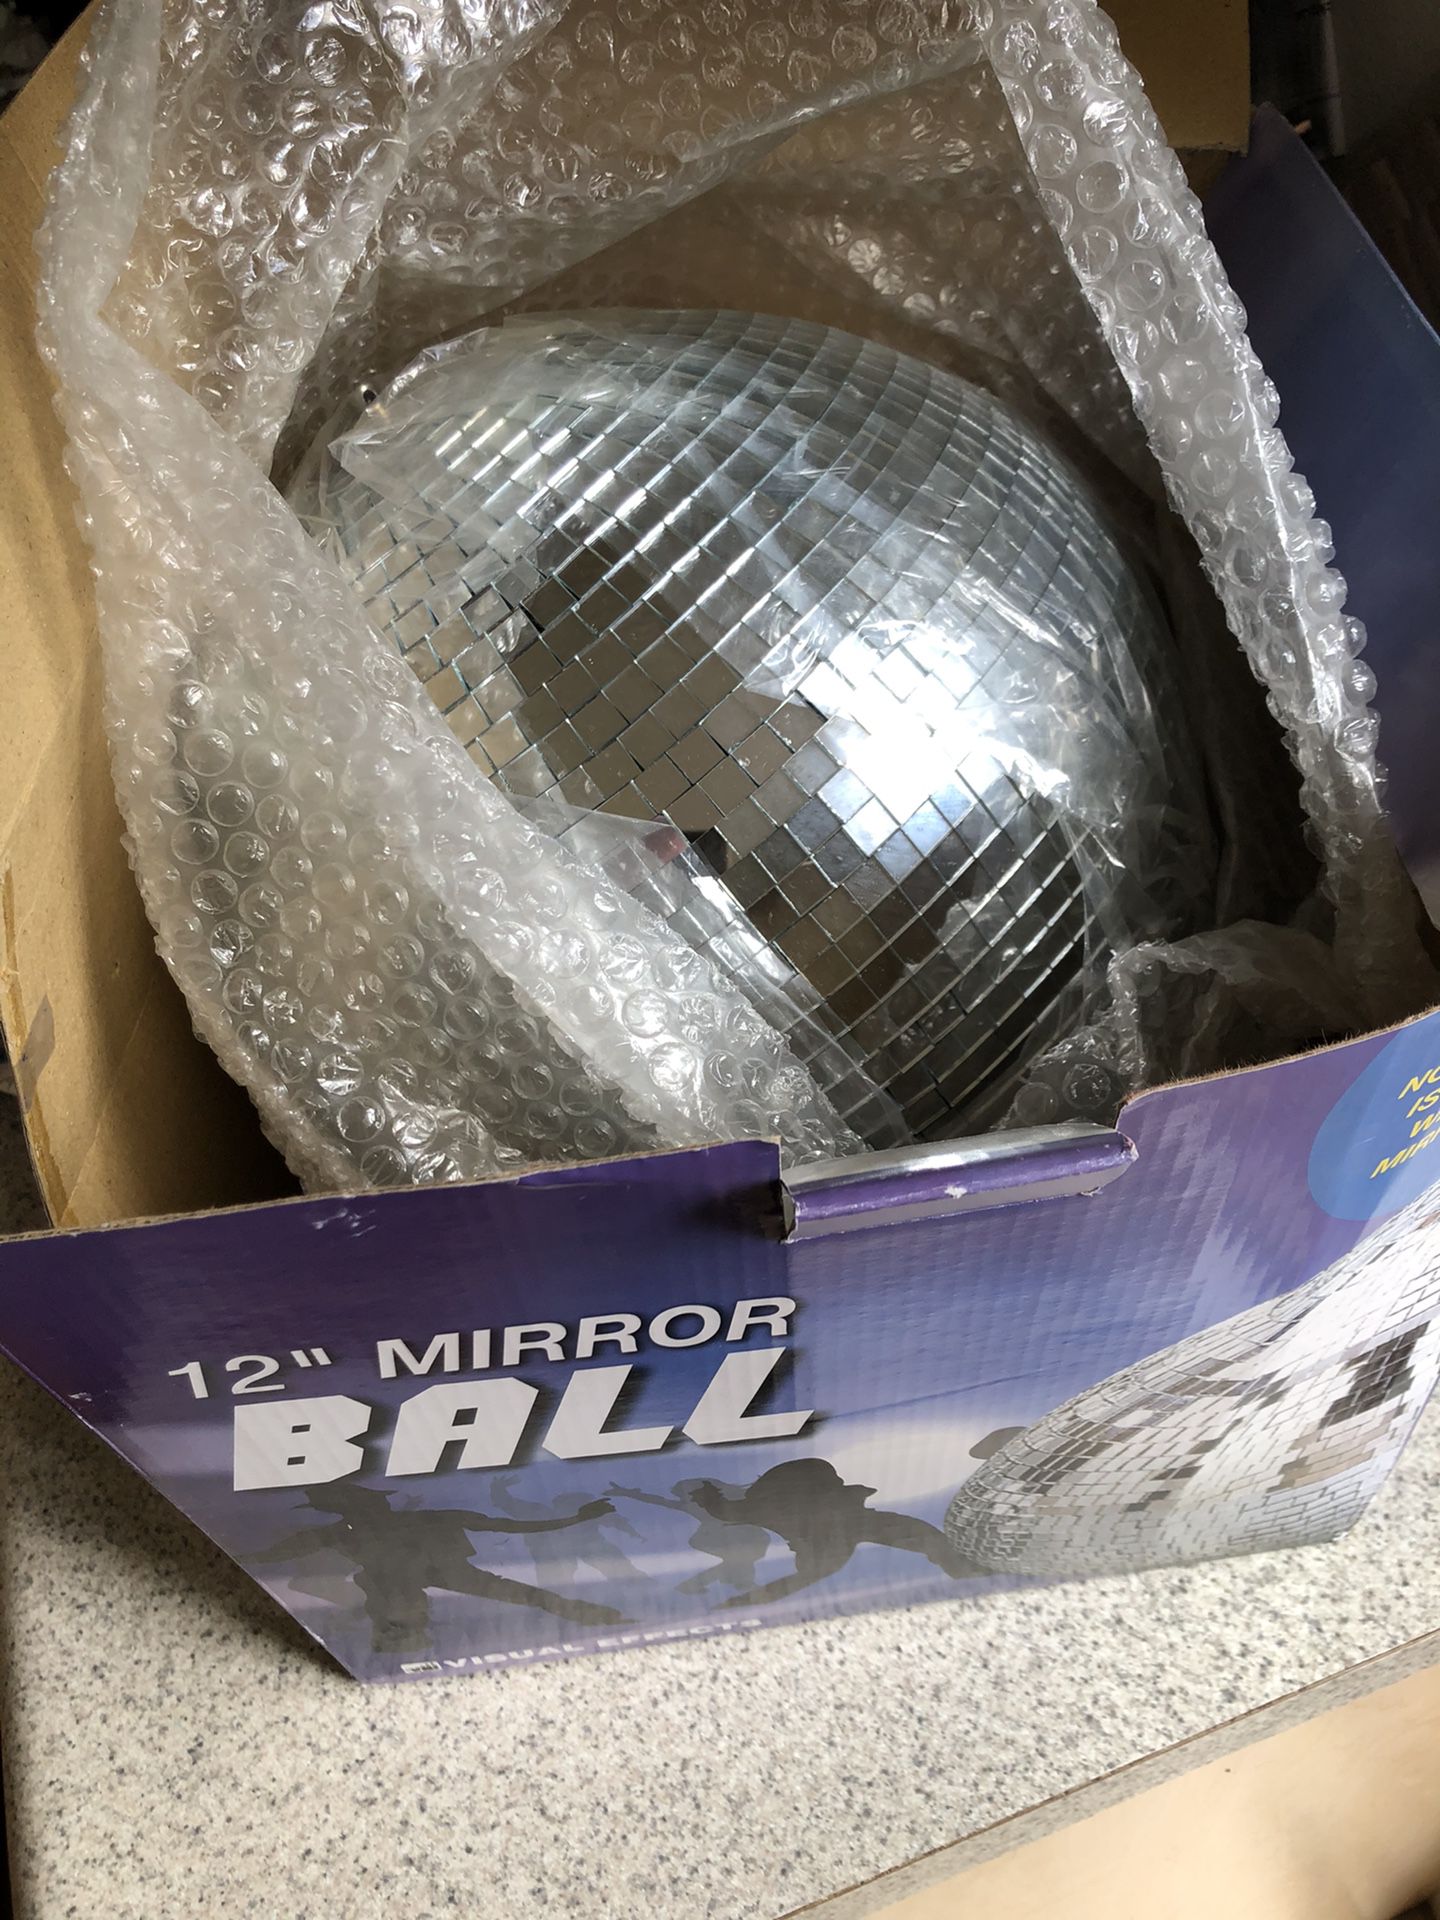 12” Mirrored Disco Ball - NEW